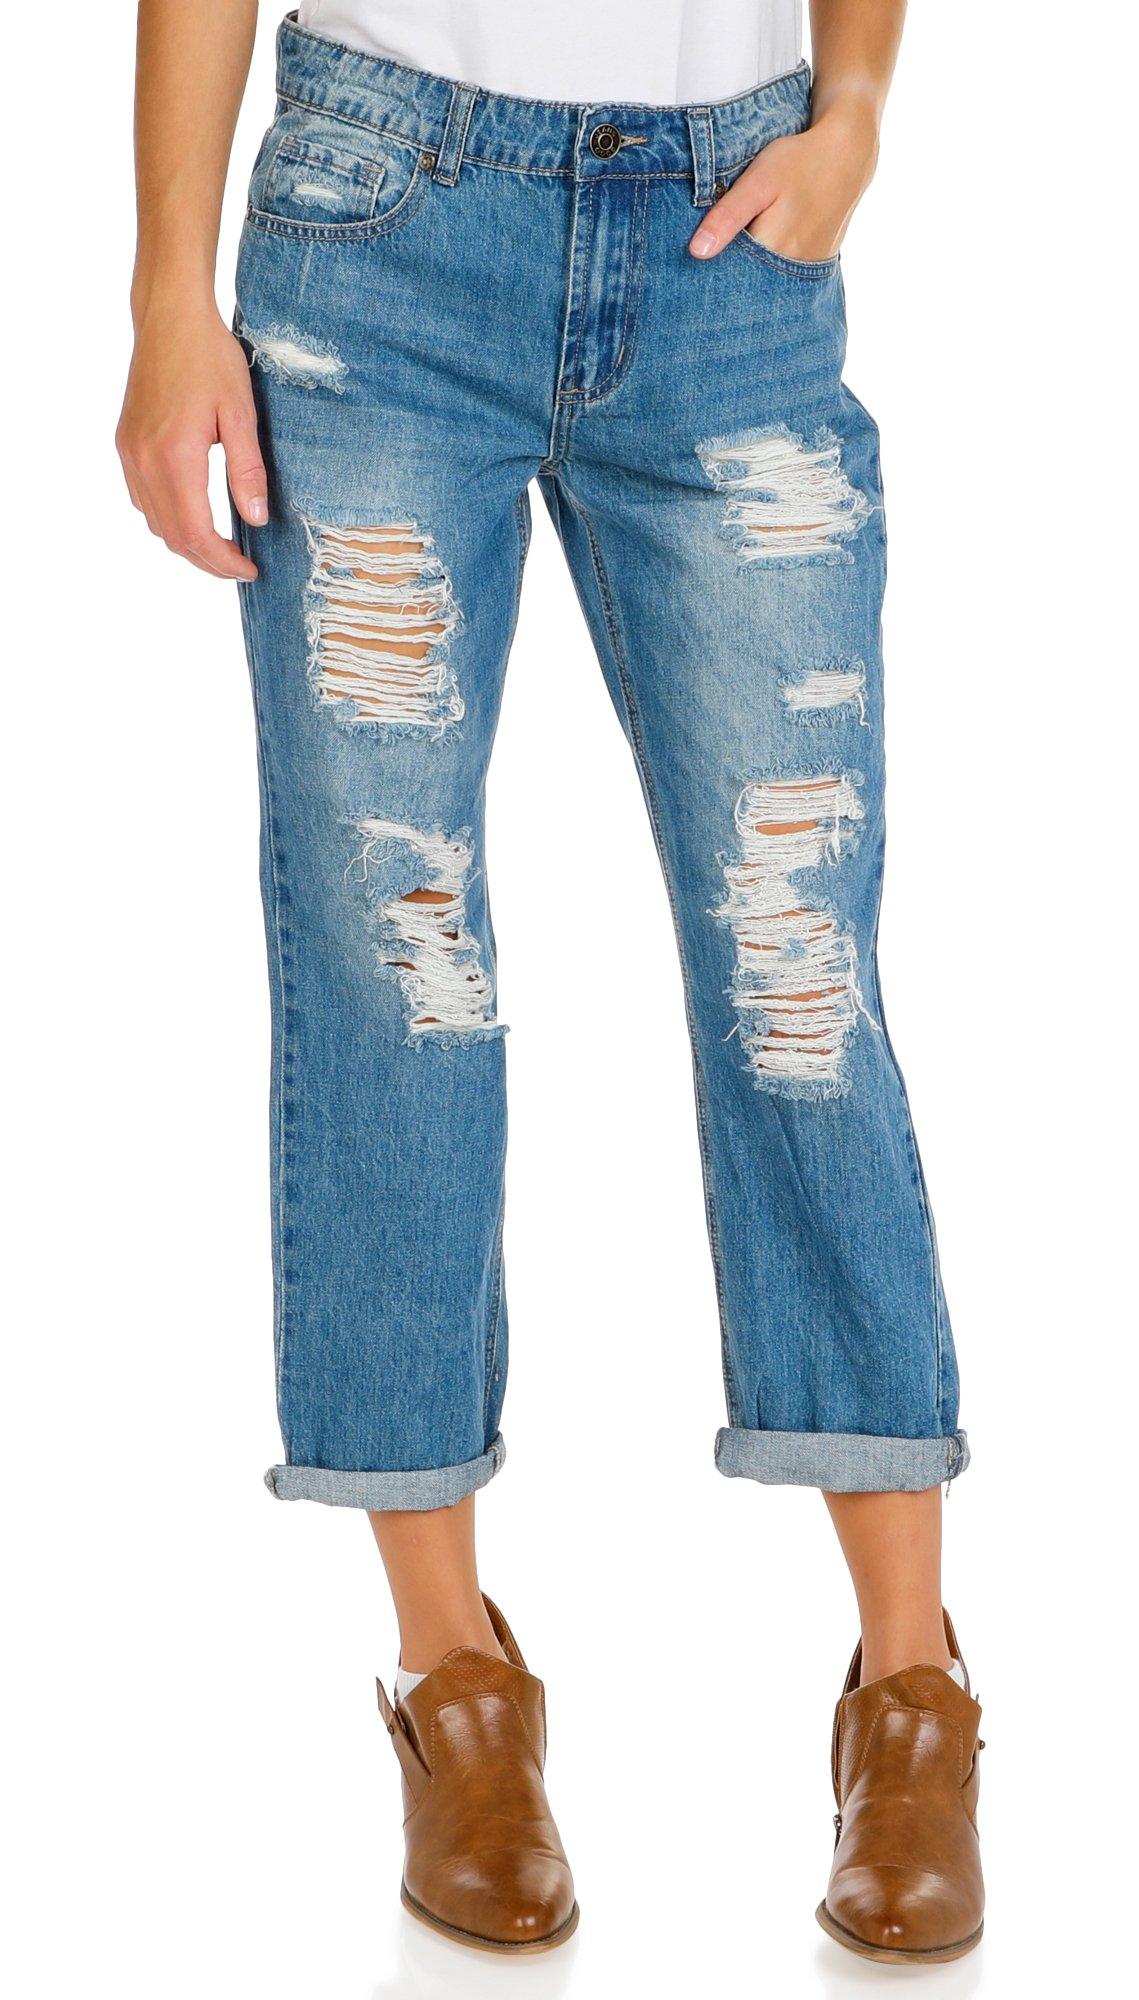 Juniors Destructive Straight Skinny Jeans